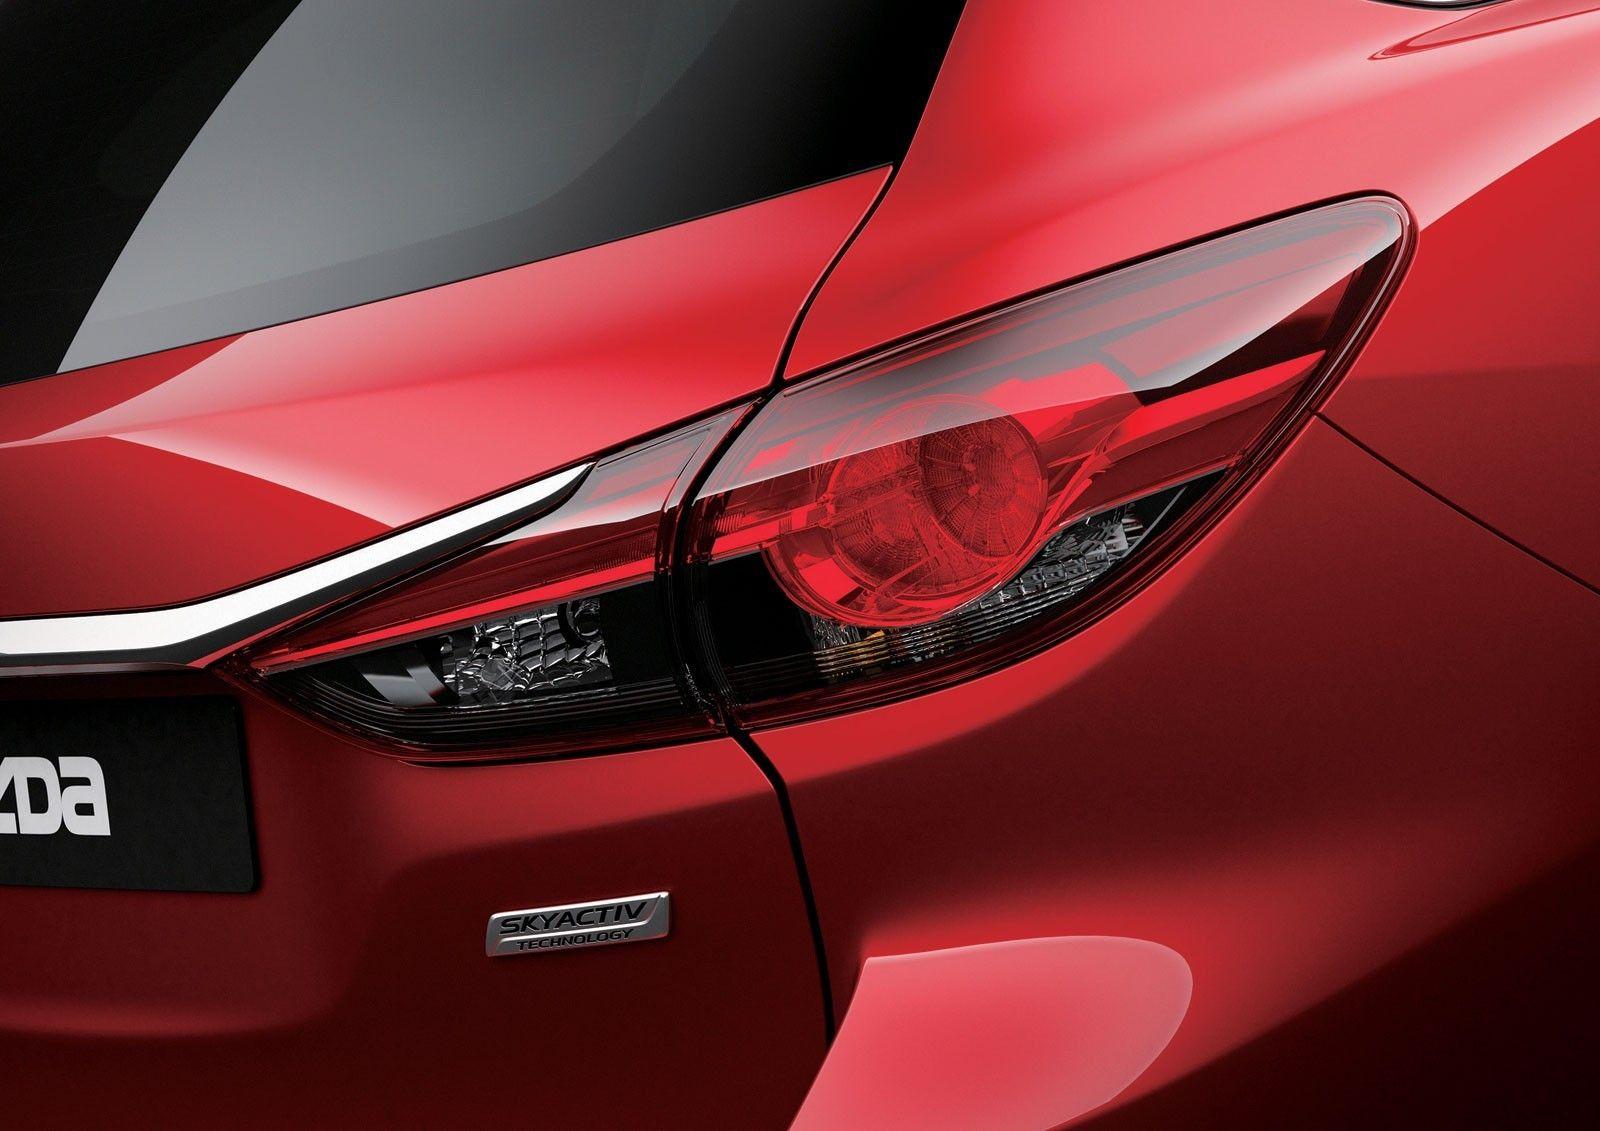 Mazda red cars wallpaper. PC